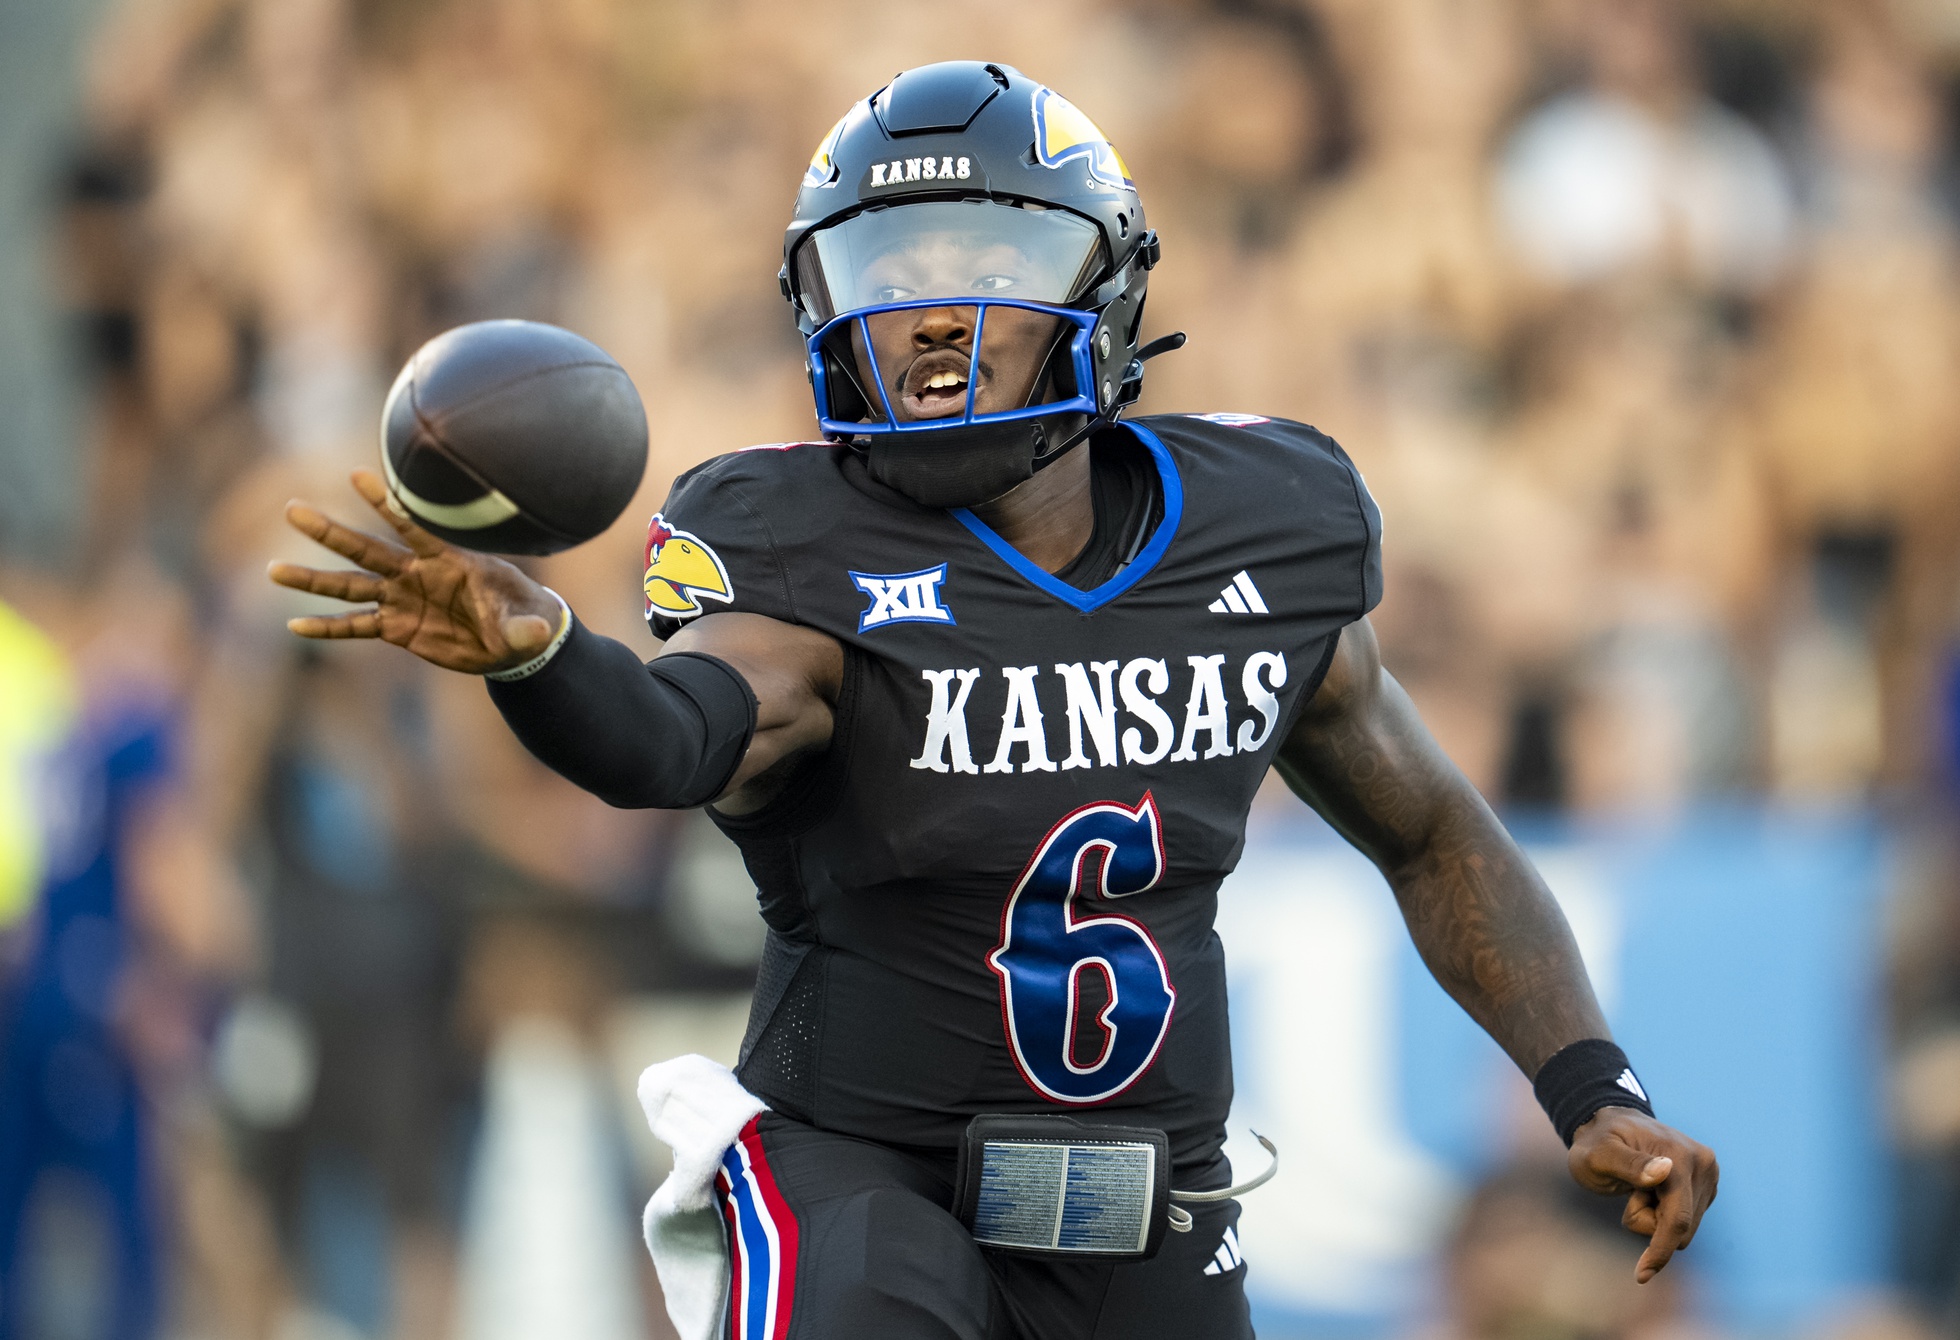 college football picks Jalon Daniels Kansas Jayhawks predictions best bet odds